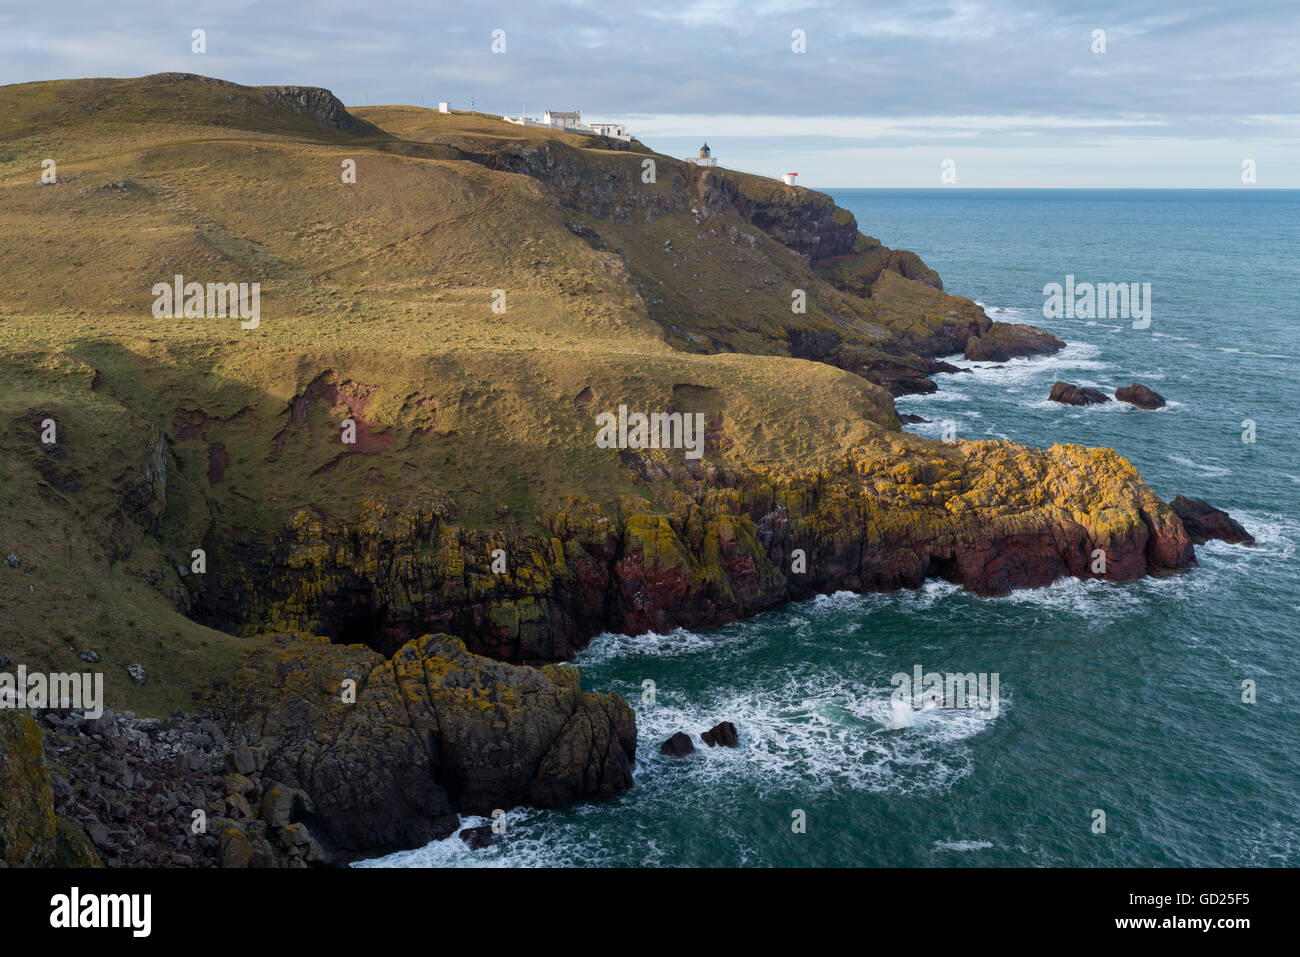 The coastline at St. Abb's Head Nature Reserve, Berwickshire, Scotland, United Kingdom, Europe Stock Photo